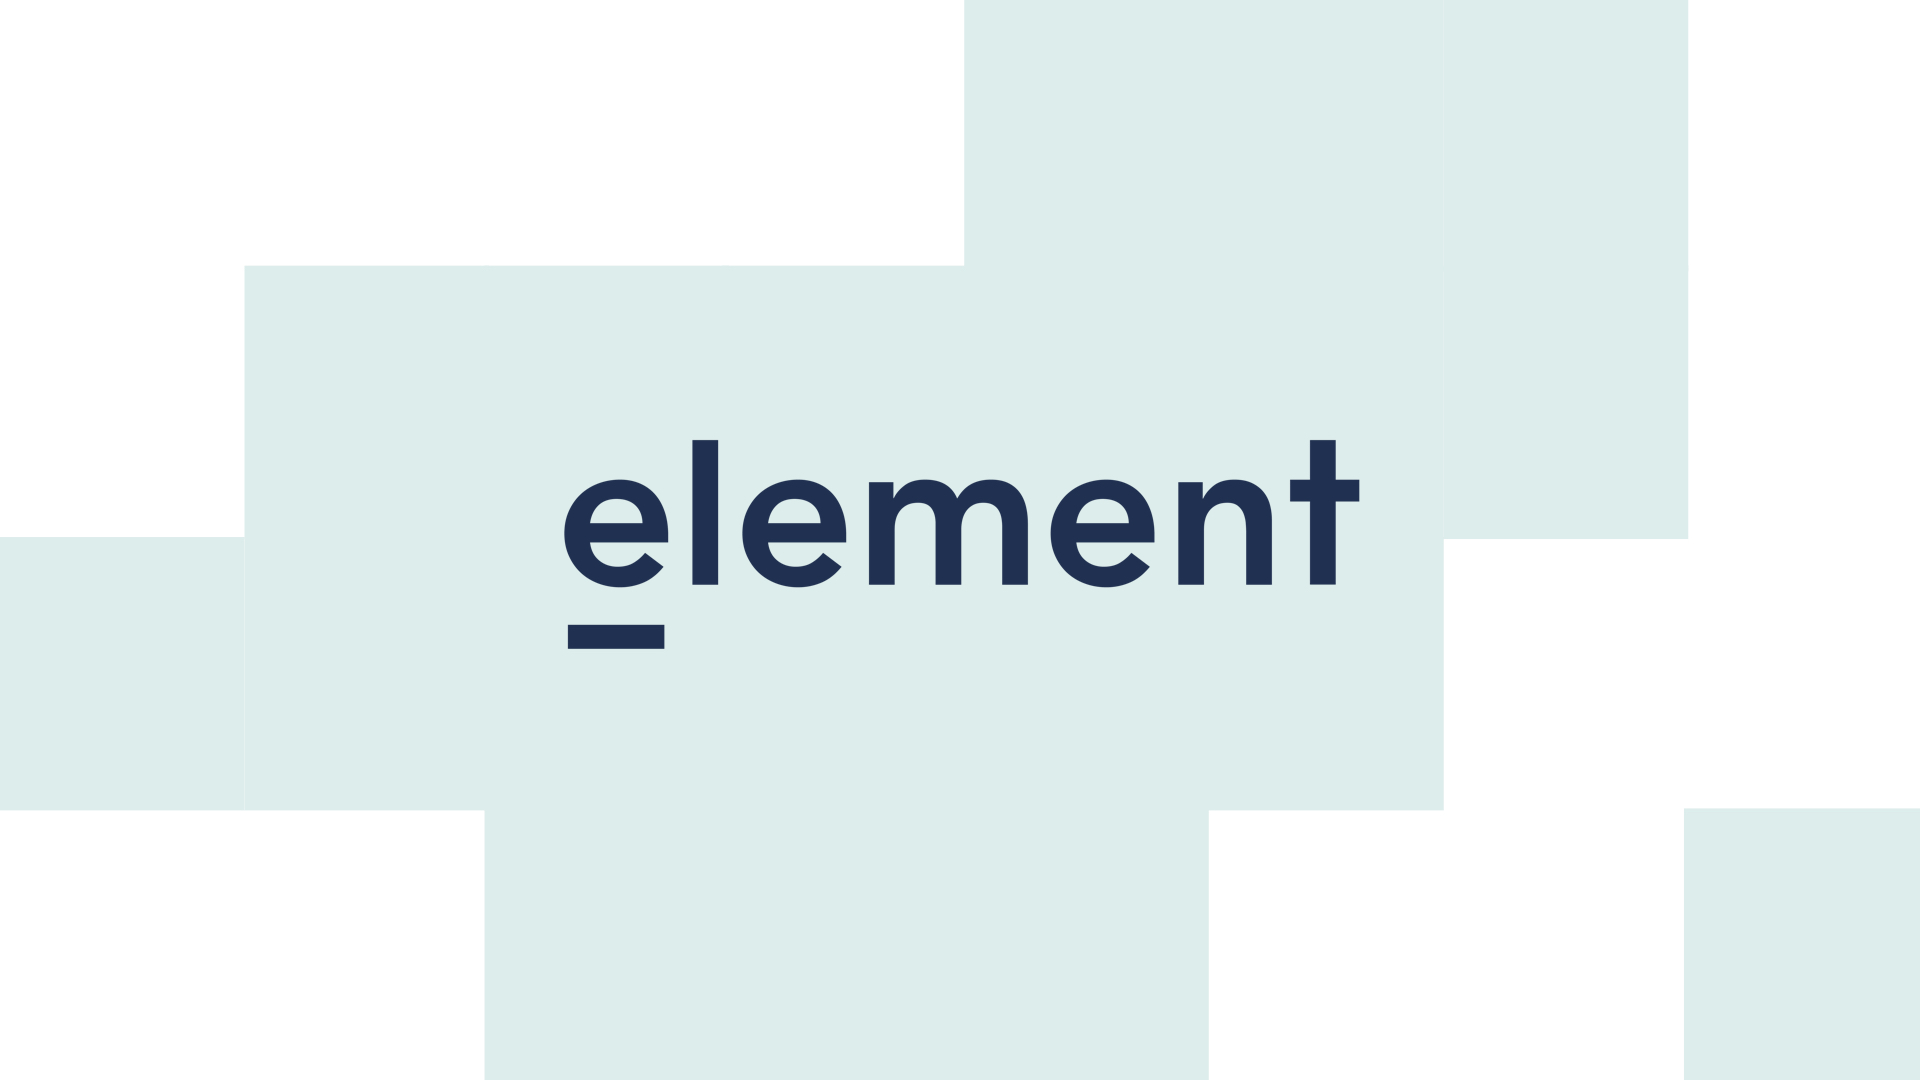 Element_.003.jpeg